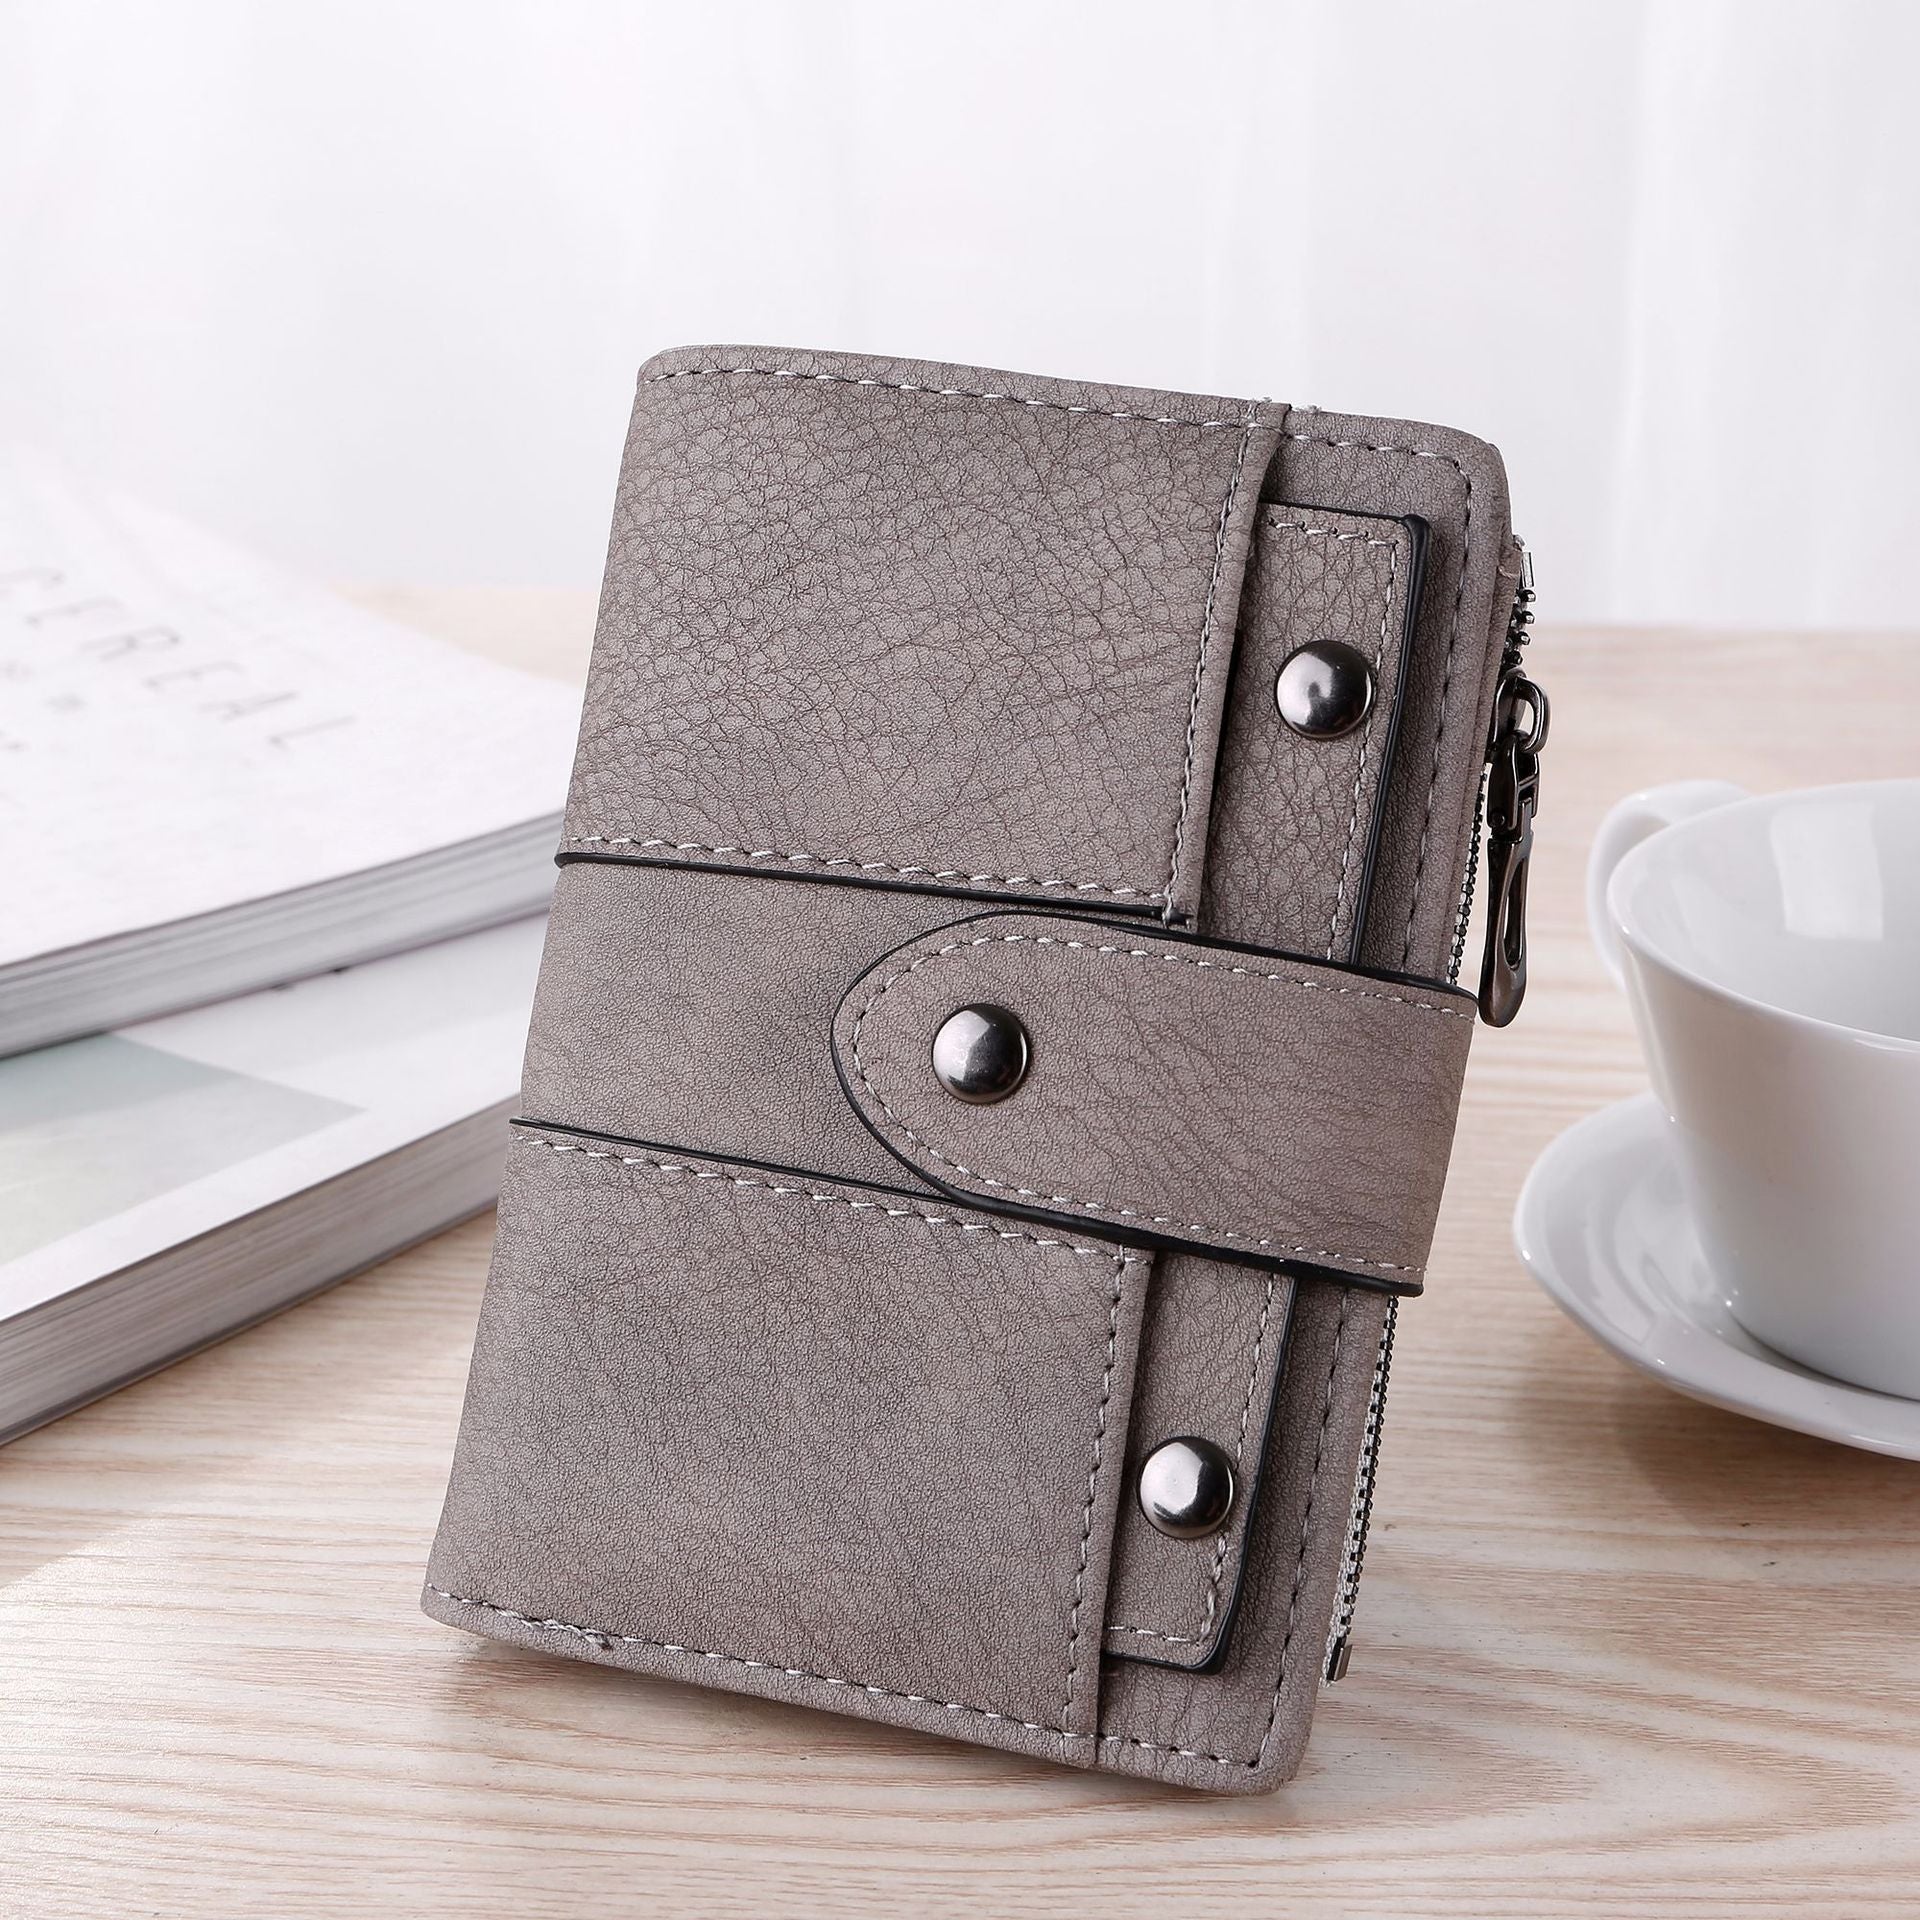 Wholesale 2022 PU Leather women's short wallet Mini clutch handbag cash  card holder coin purse hand bag with zipper for girls billeteras From  m.